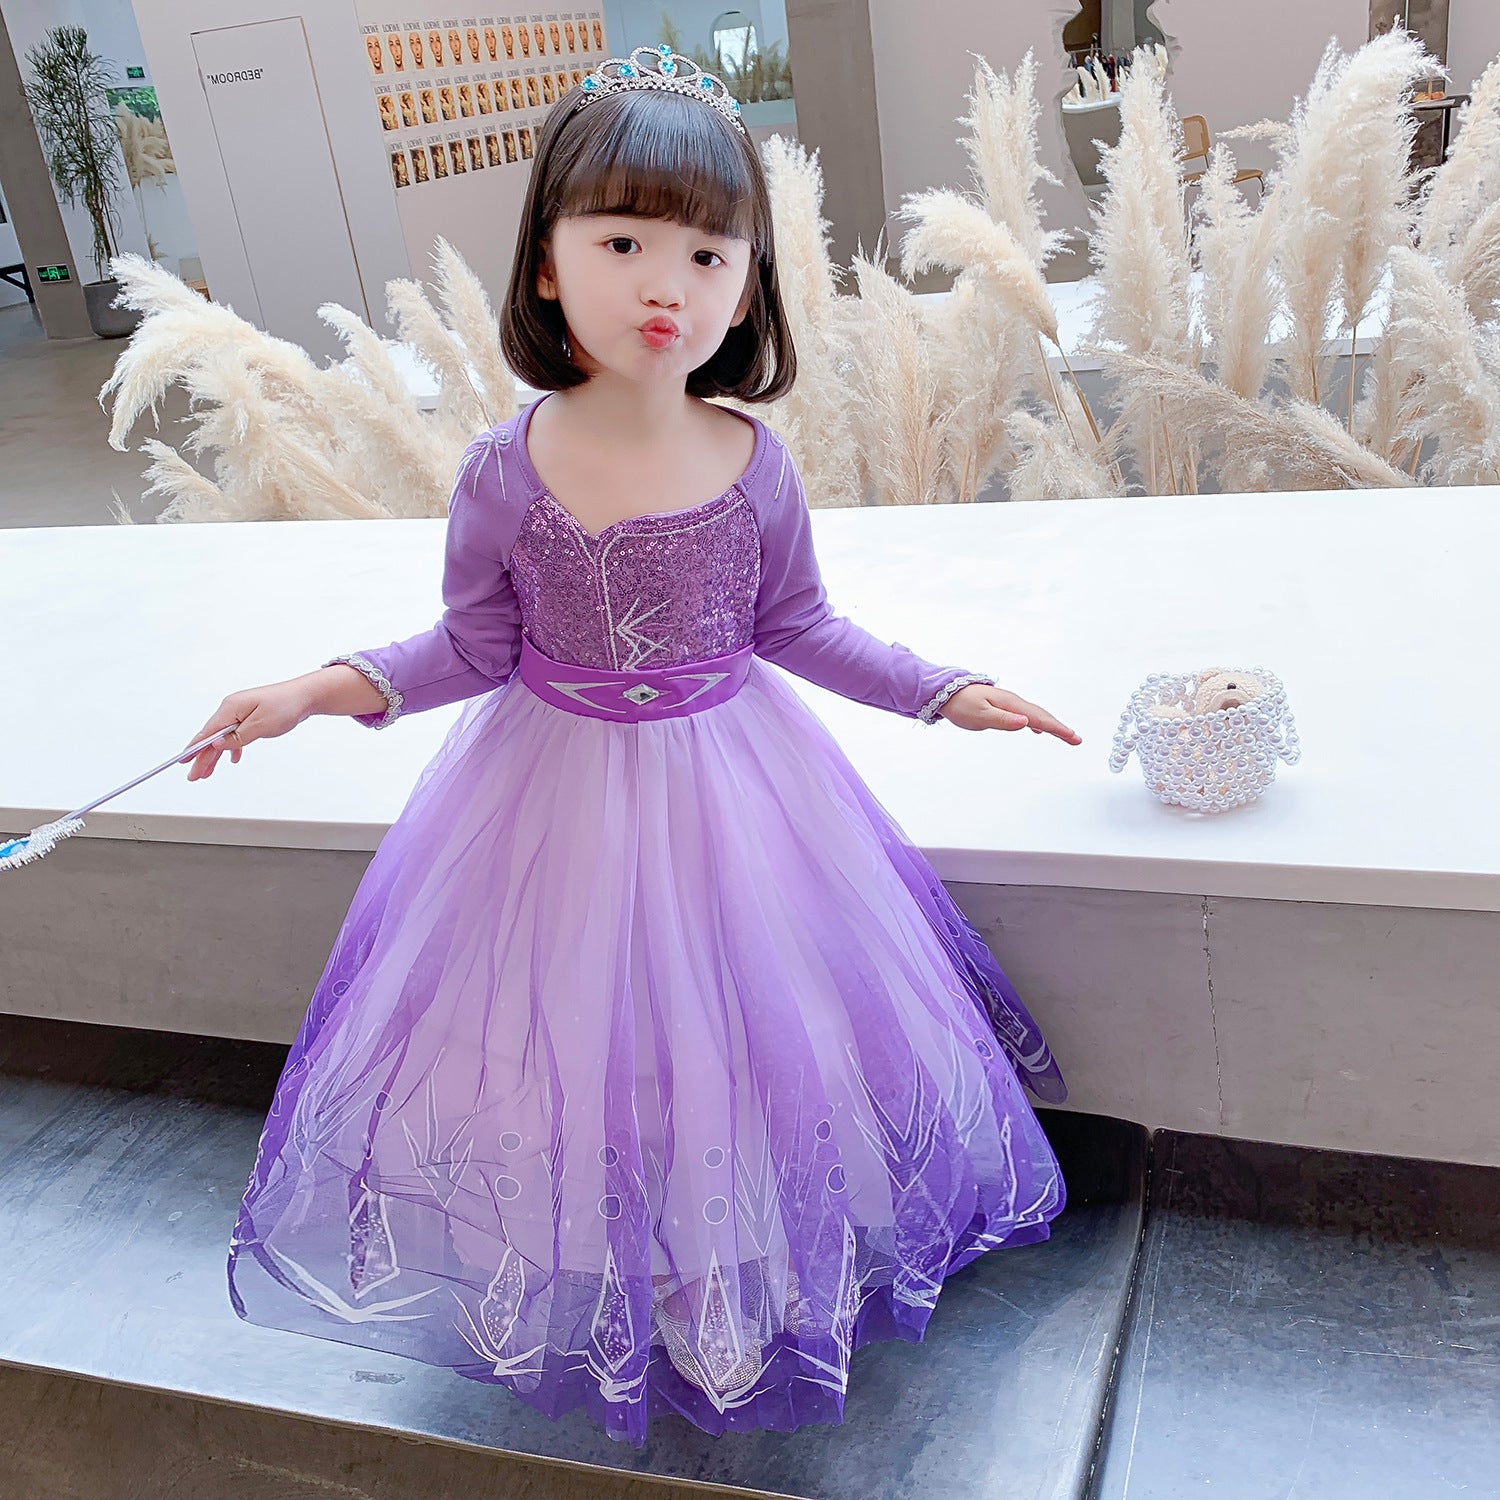 2019 New Release Girls Frozen 2 Elsa Costume Party Birthday Dress size  2-10Yrs